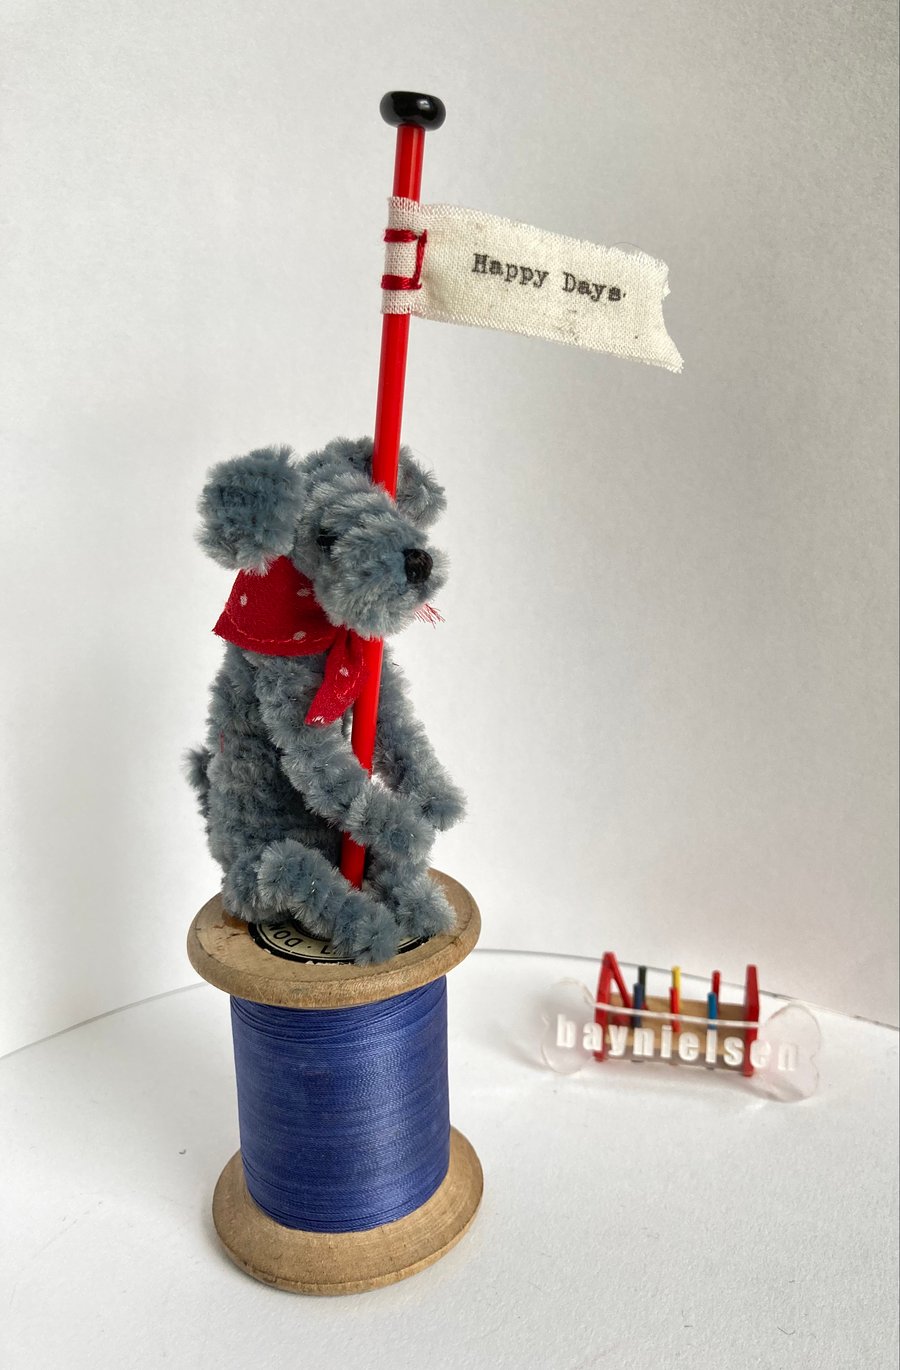 Miniature Handmade Dog on a Vintage Spool of Cotton - Flag Message 